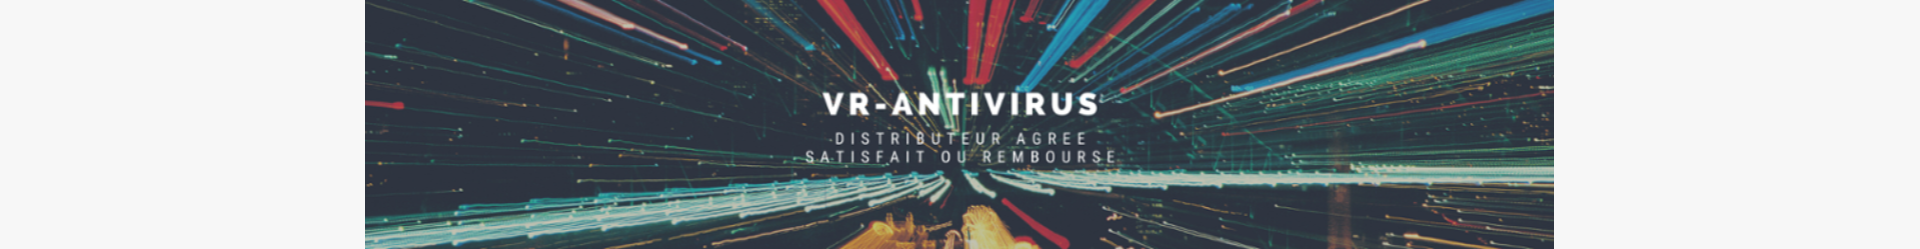 VR-Antivirus